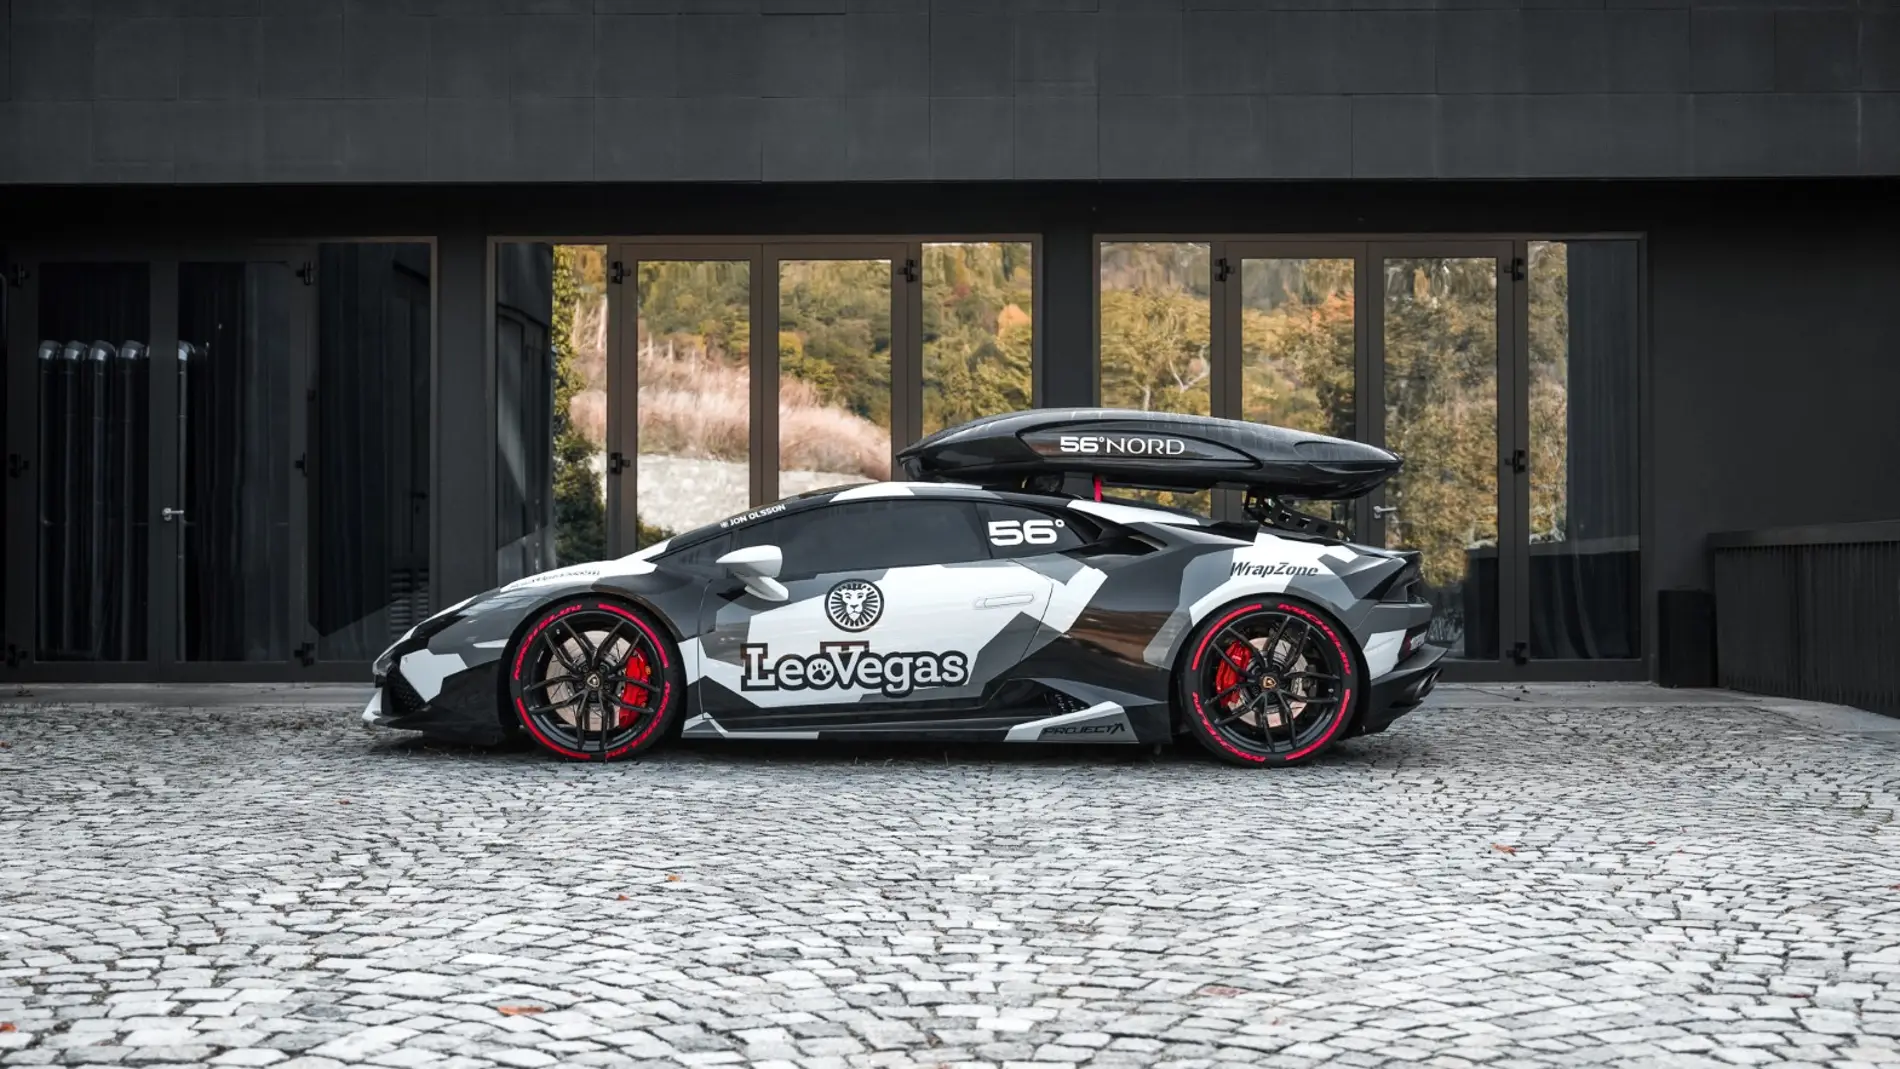 Jon-Olsson-Lamborghini-Hurac%C3%A1n-Camoflage-16-Large.jpg